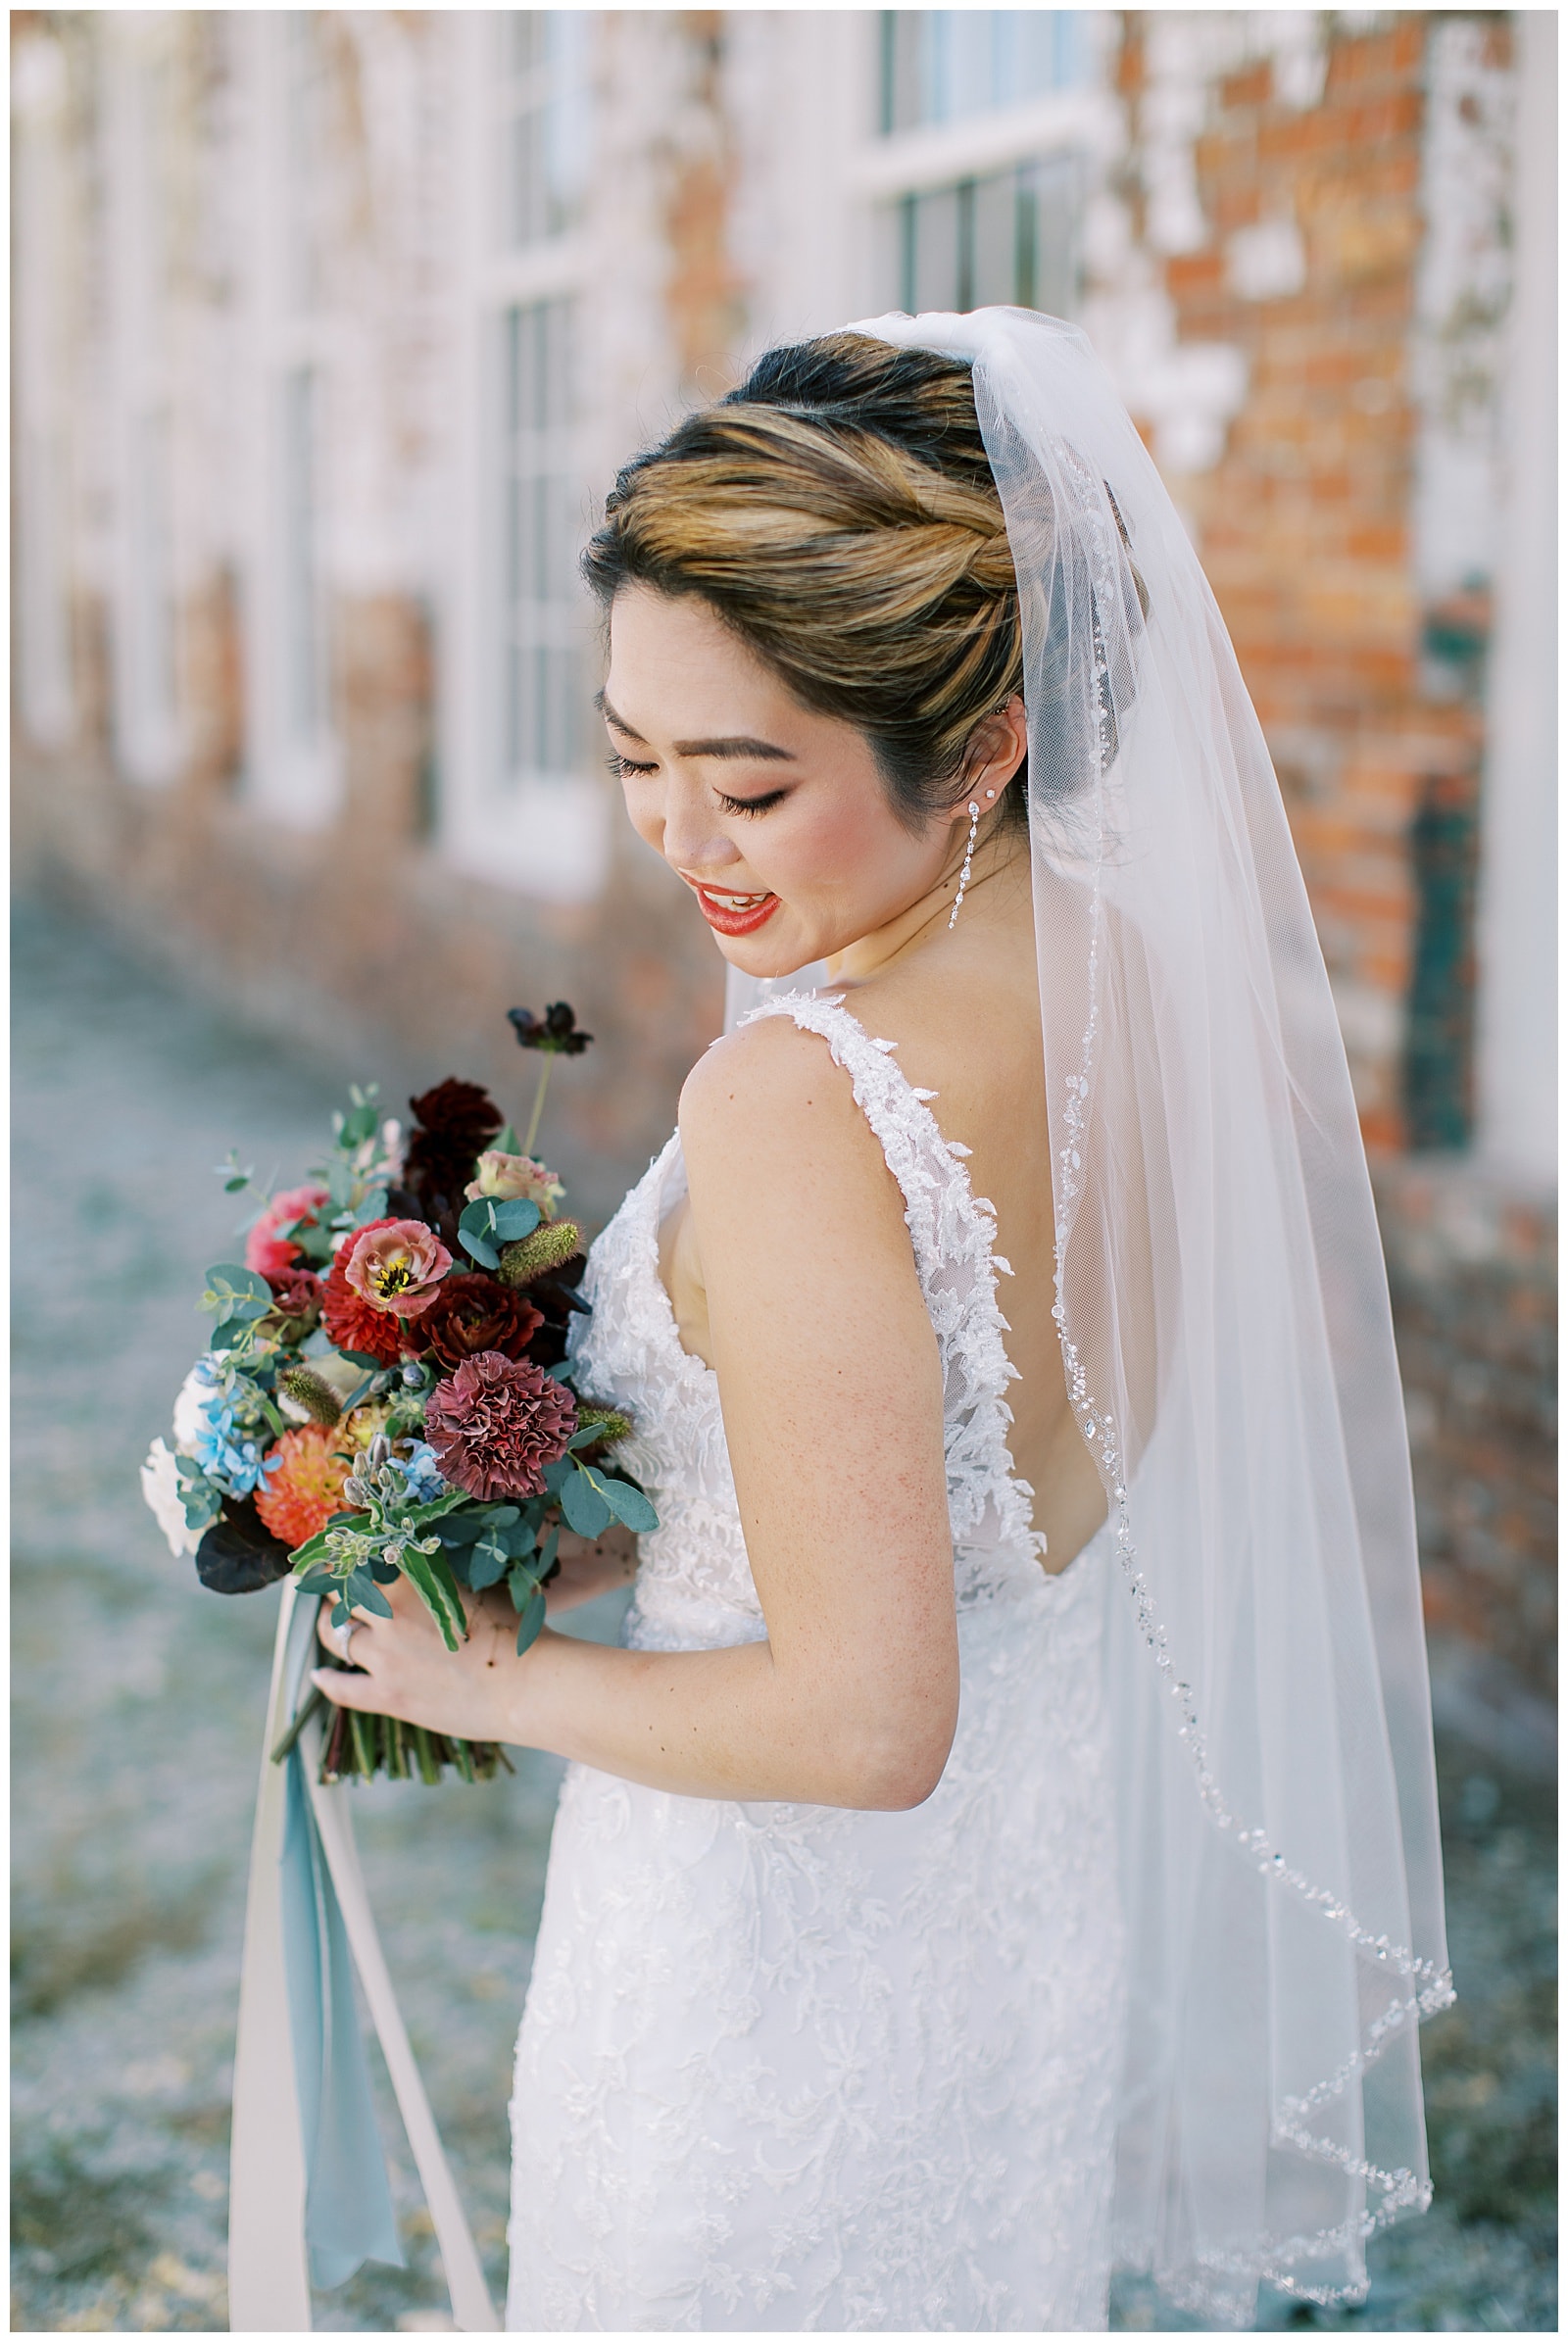 Danielle-Defayette-Photography-Cloth-Mill-at-Eno-River-Wedding-NC_0018.jpg